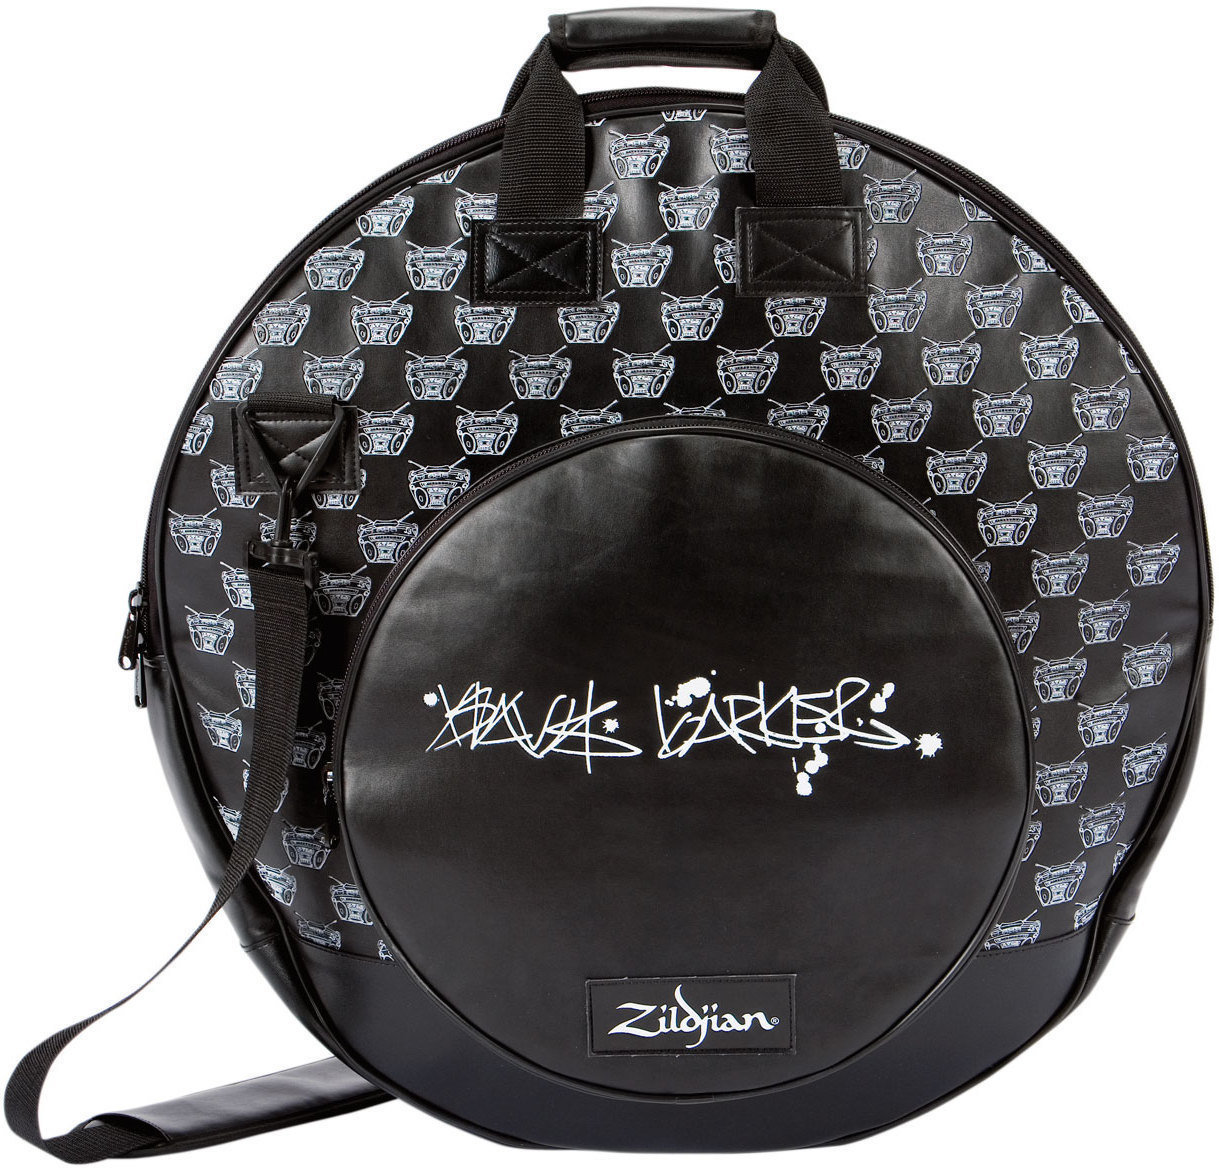 Beckentasche Zildjian Travis Barker Boom Box Cymbal Bag